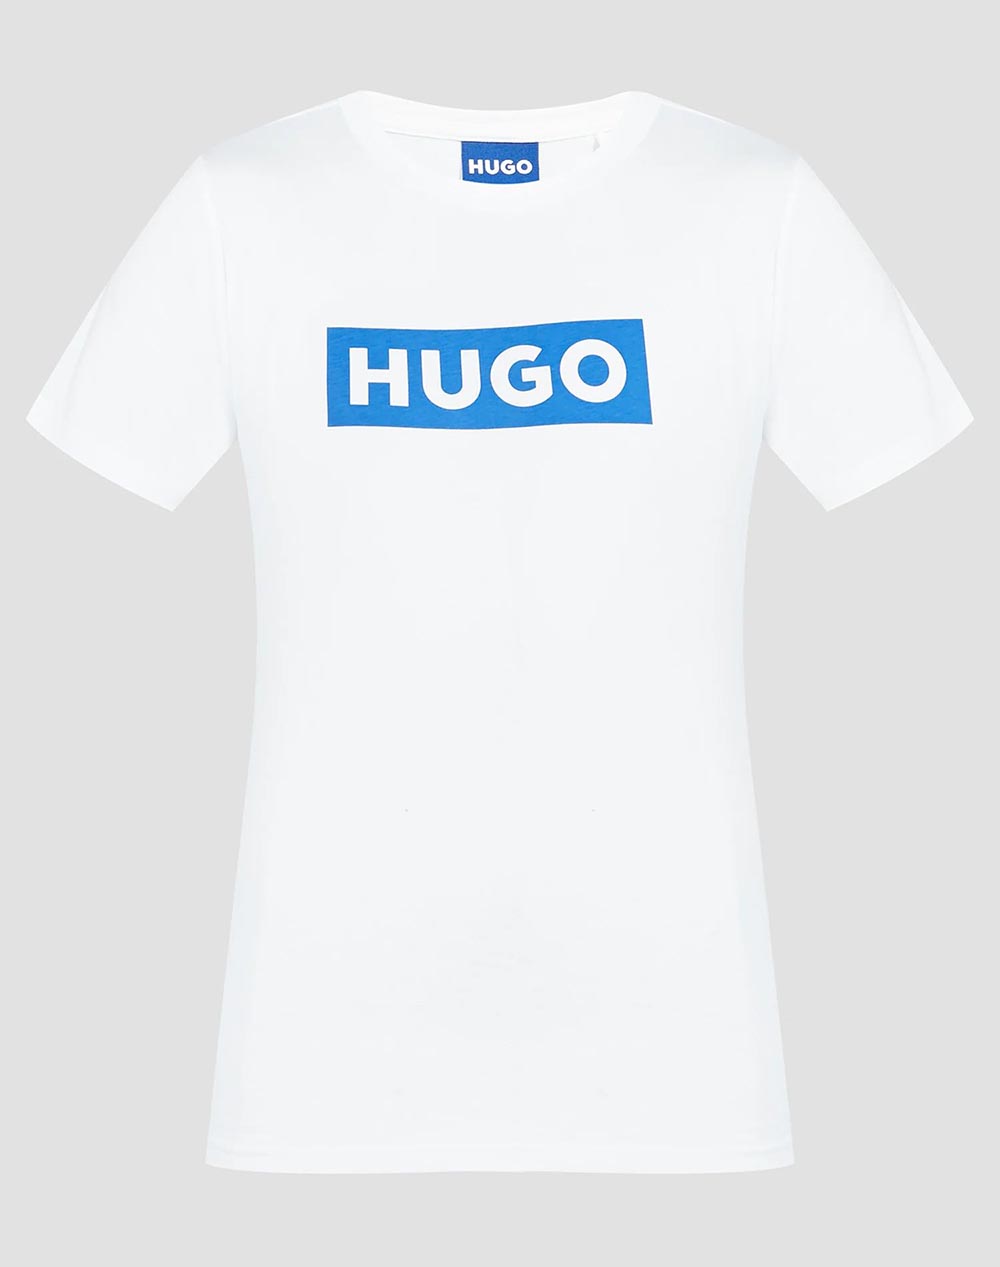 HUGO Classic Tee_B 10258021 01